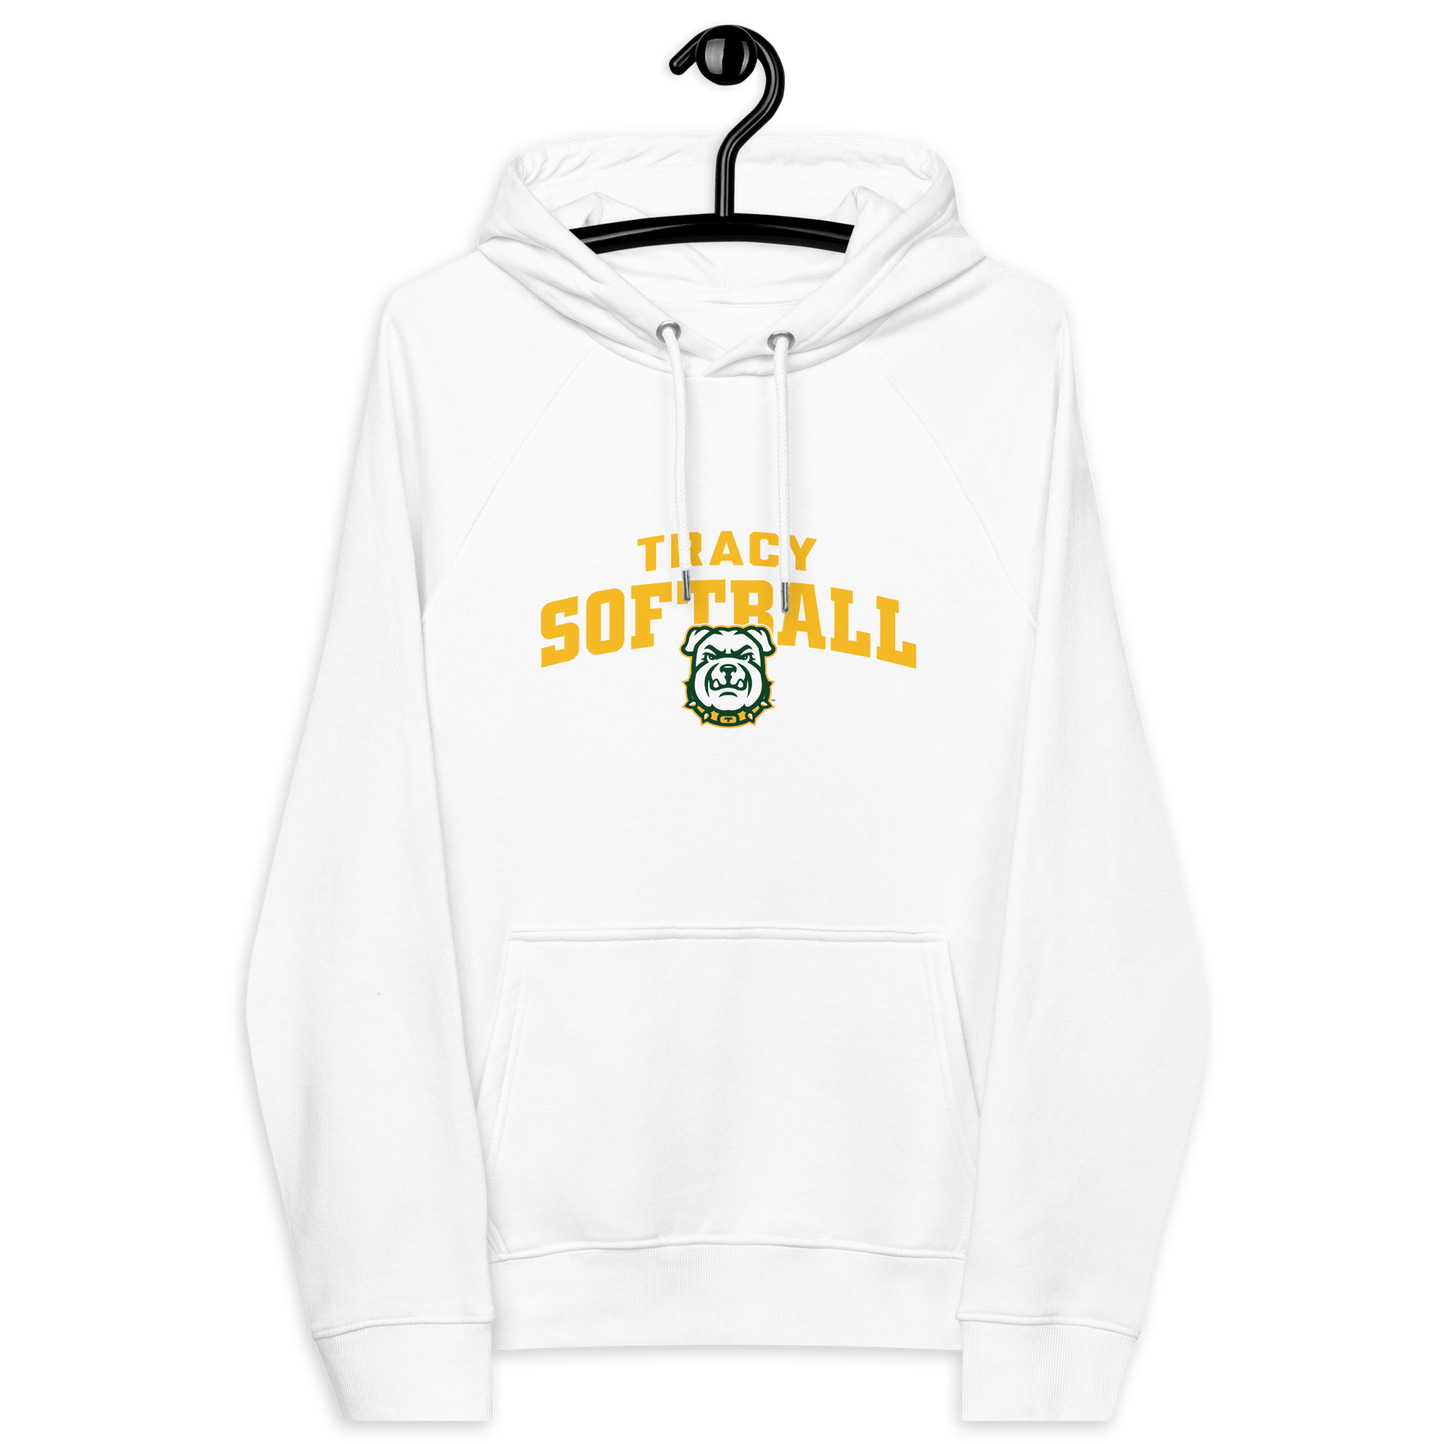 Tracy Softball Unisex eco raglan hoodie